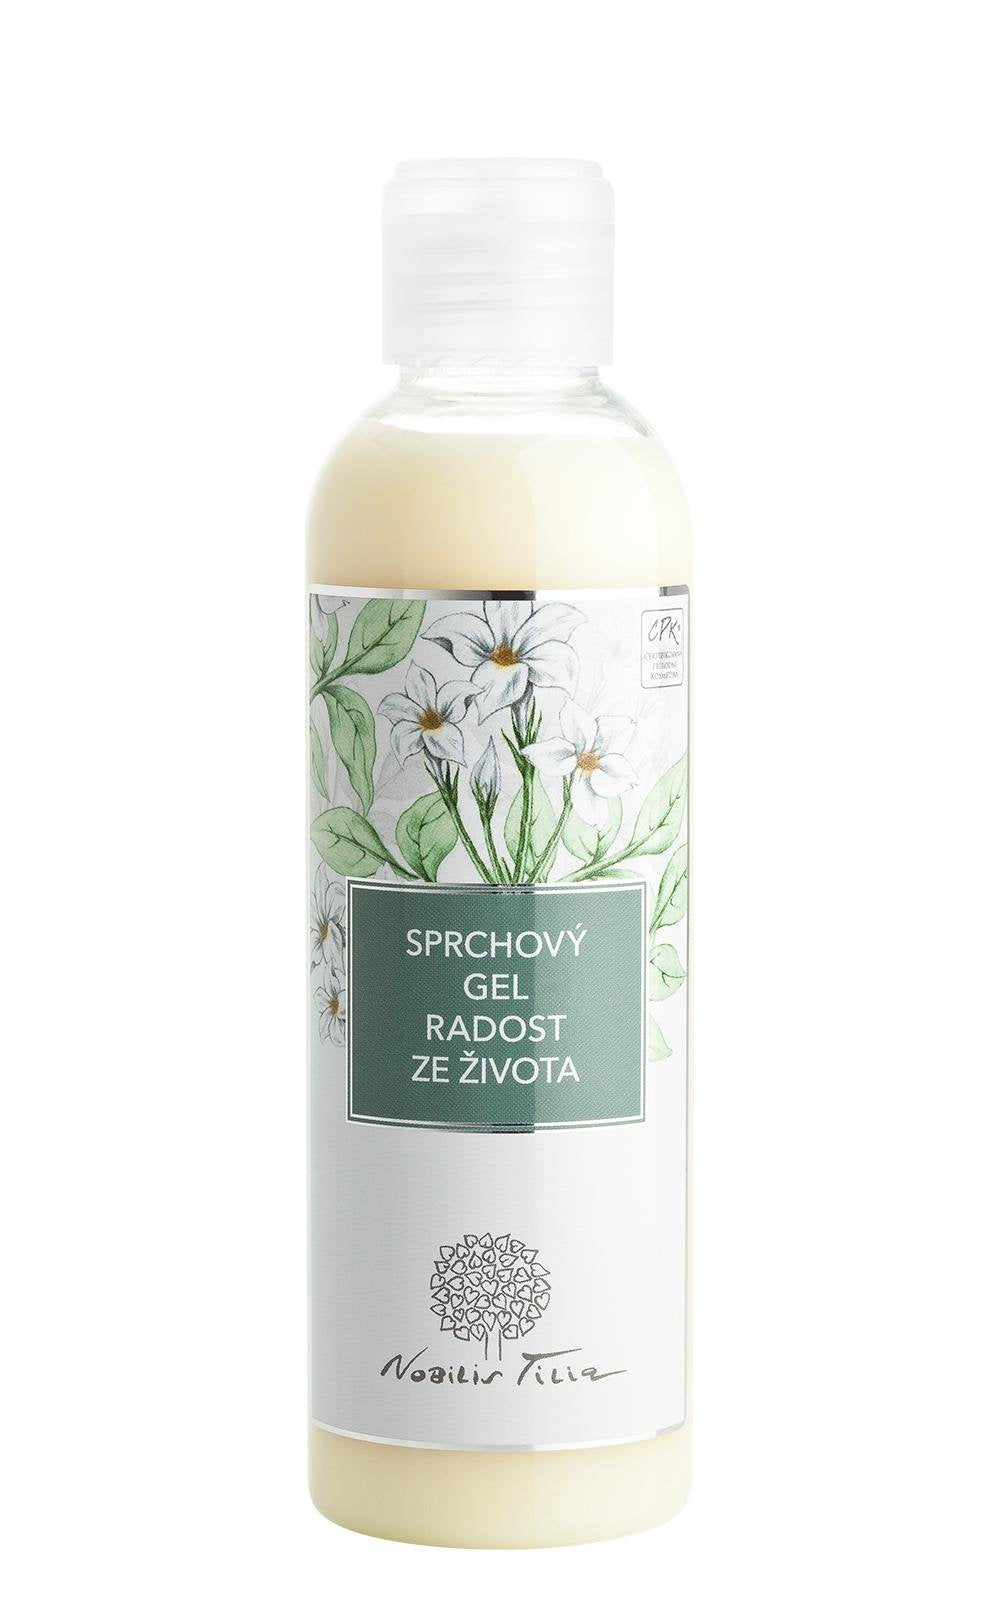 Nobilis Tilia Sprchový gel Radost ze života (200 ml) - s bio slunečnicovým olejem, cpk